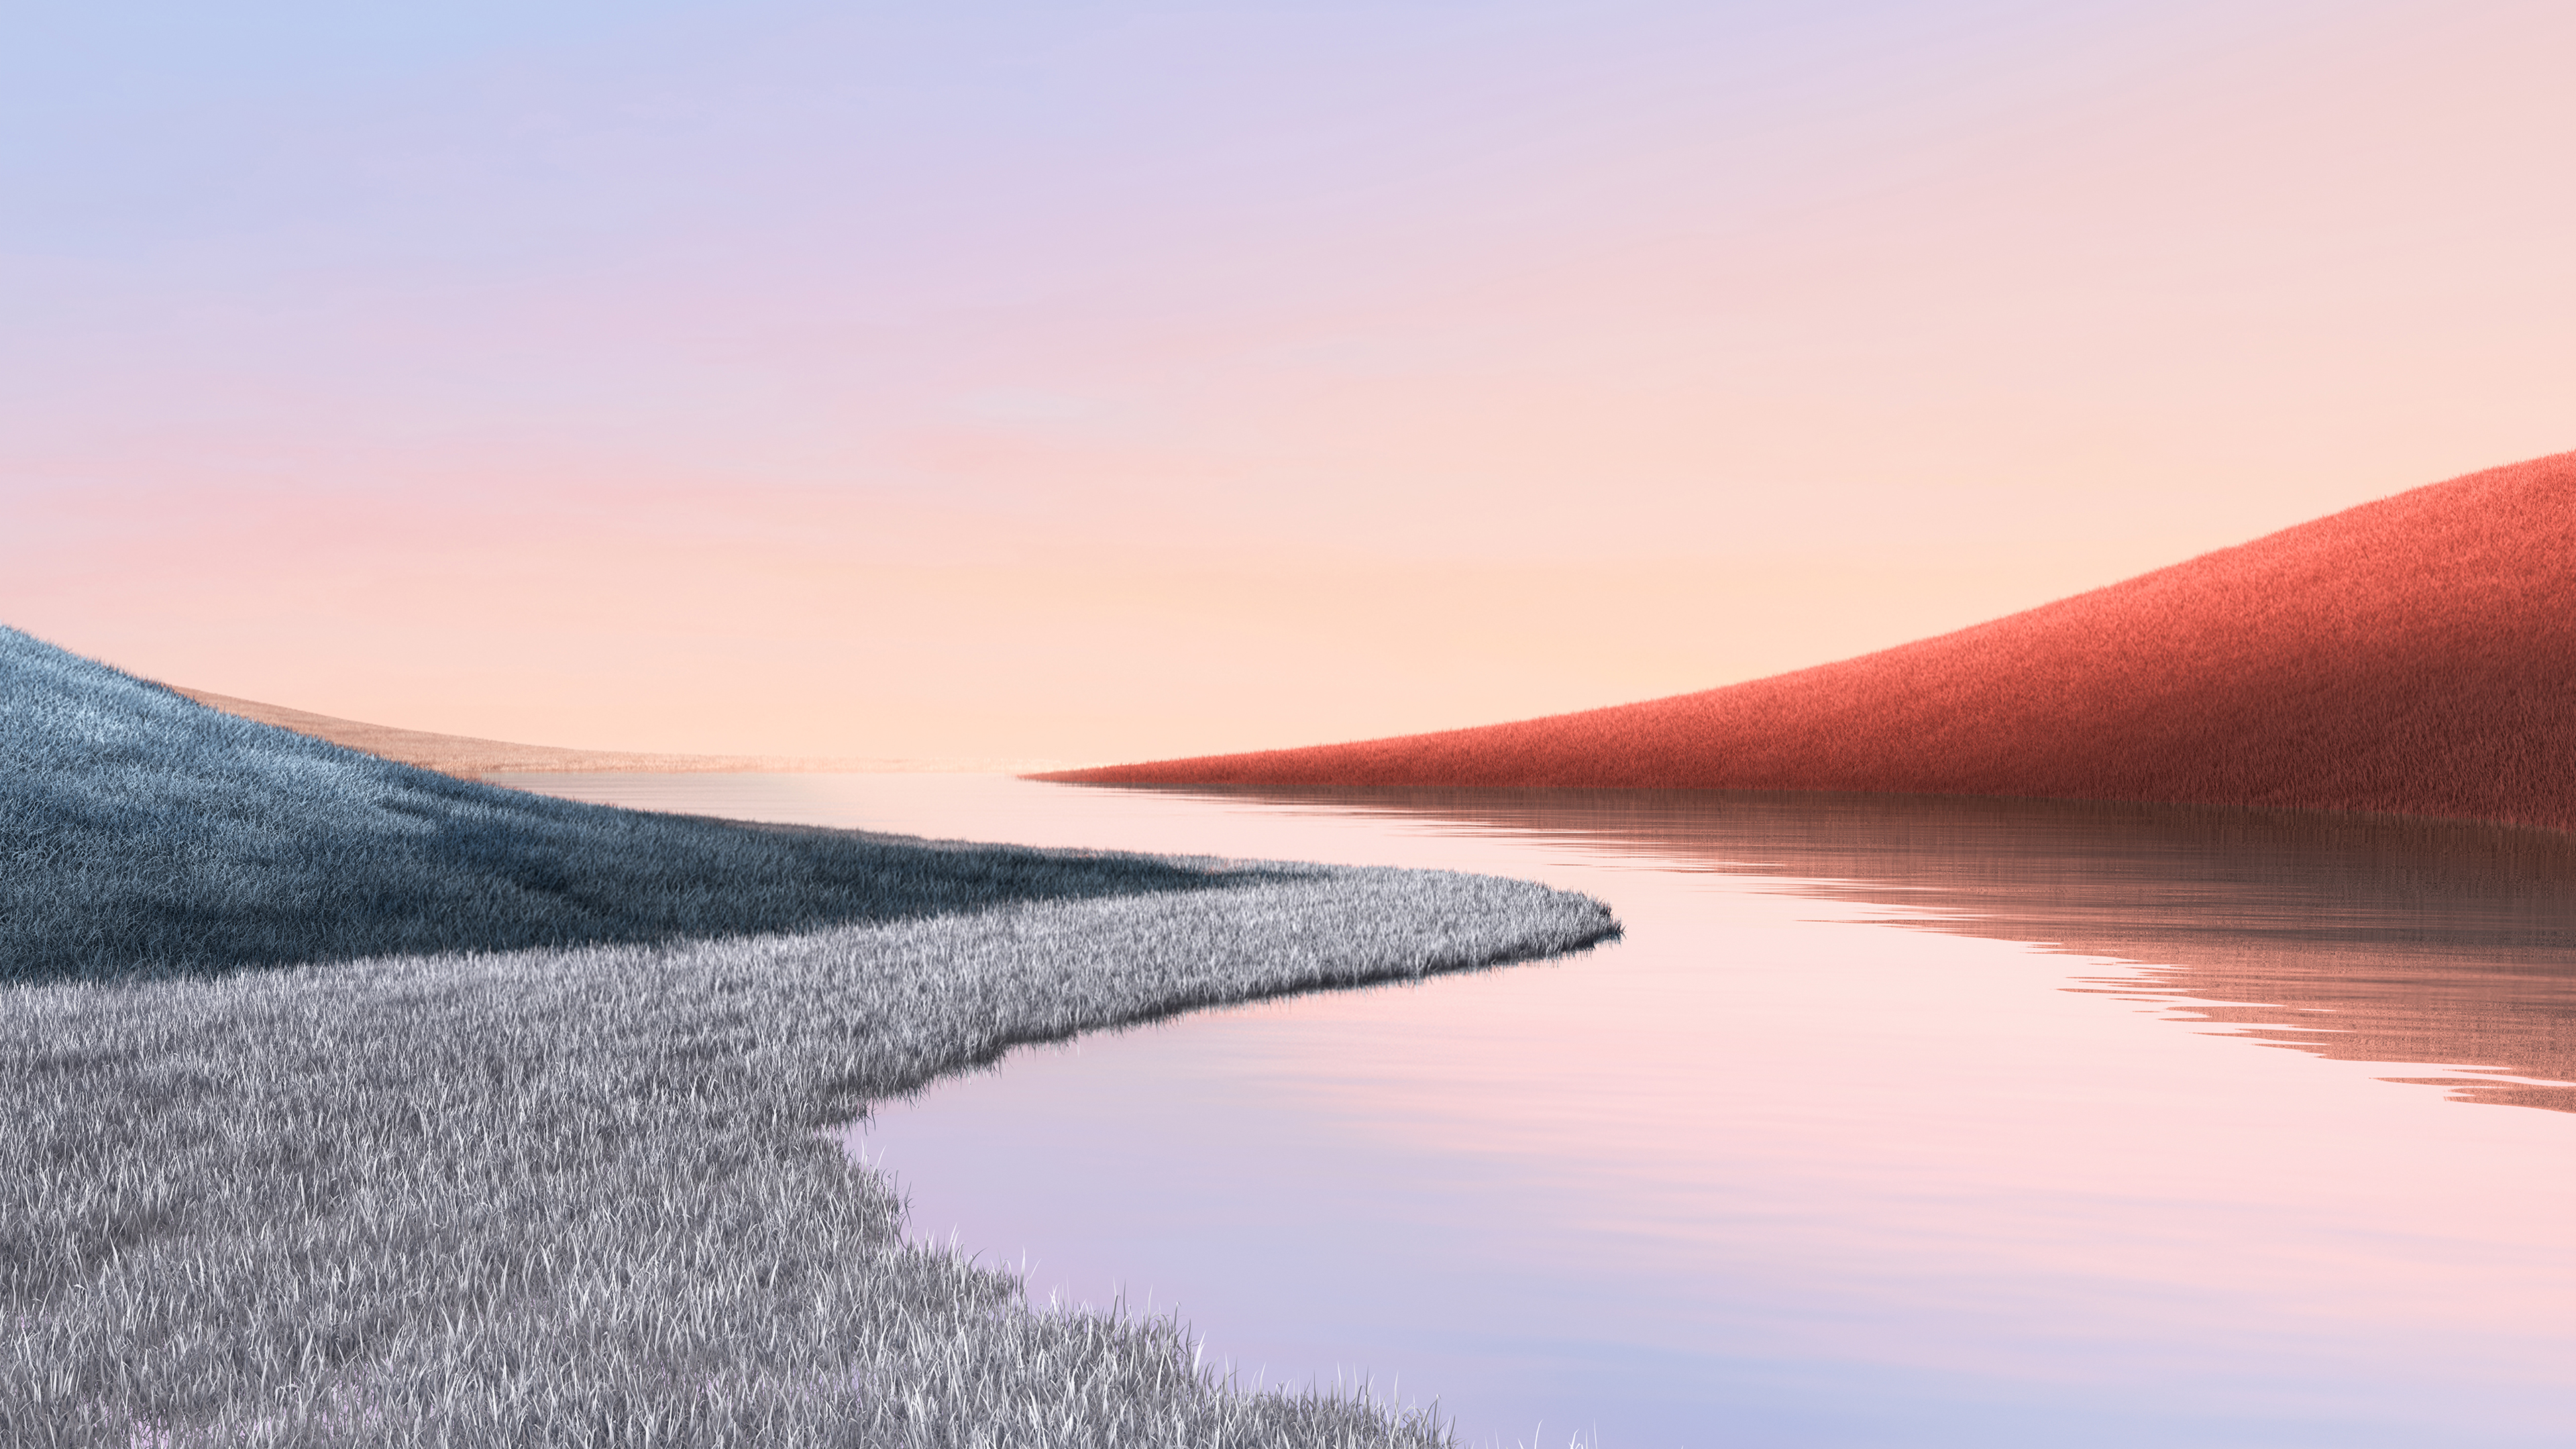 4K Colorful Landscape Wallpaper, HD Nature 4K Wallpapers, Images